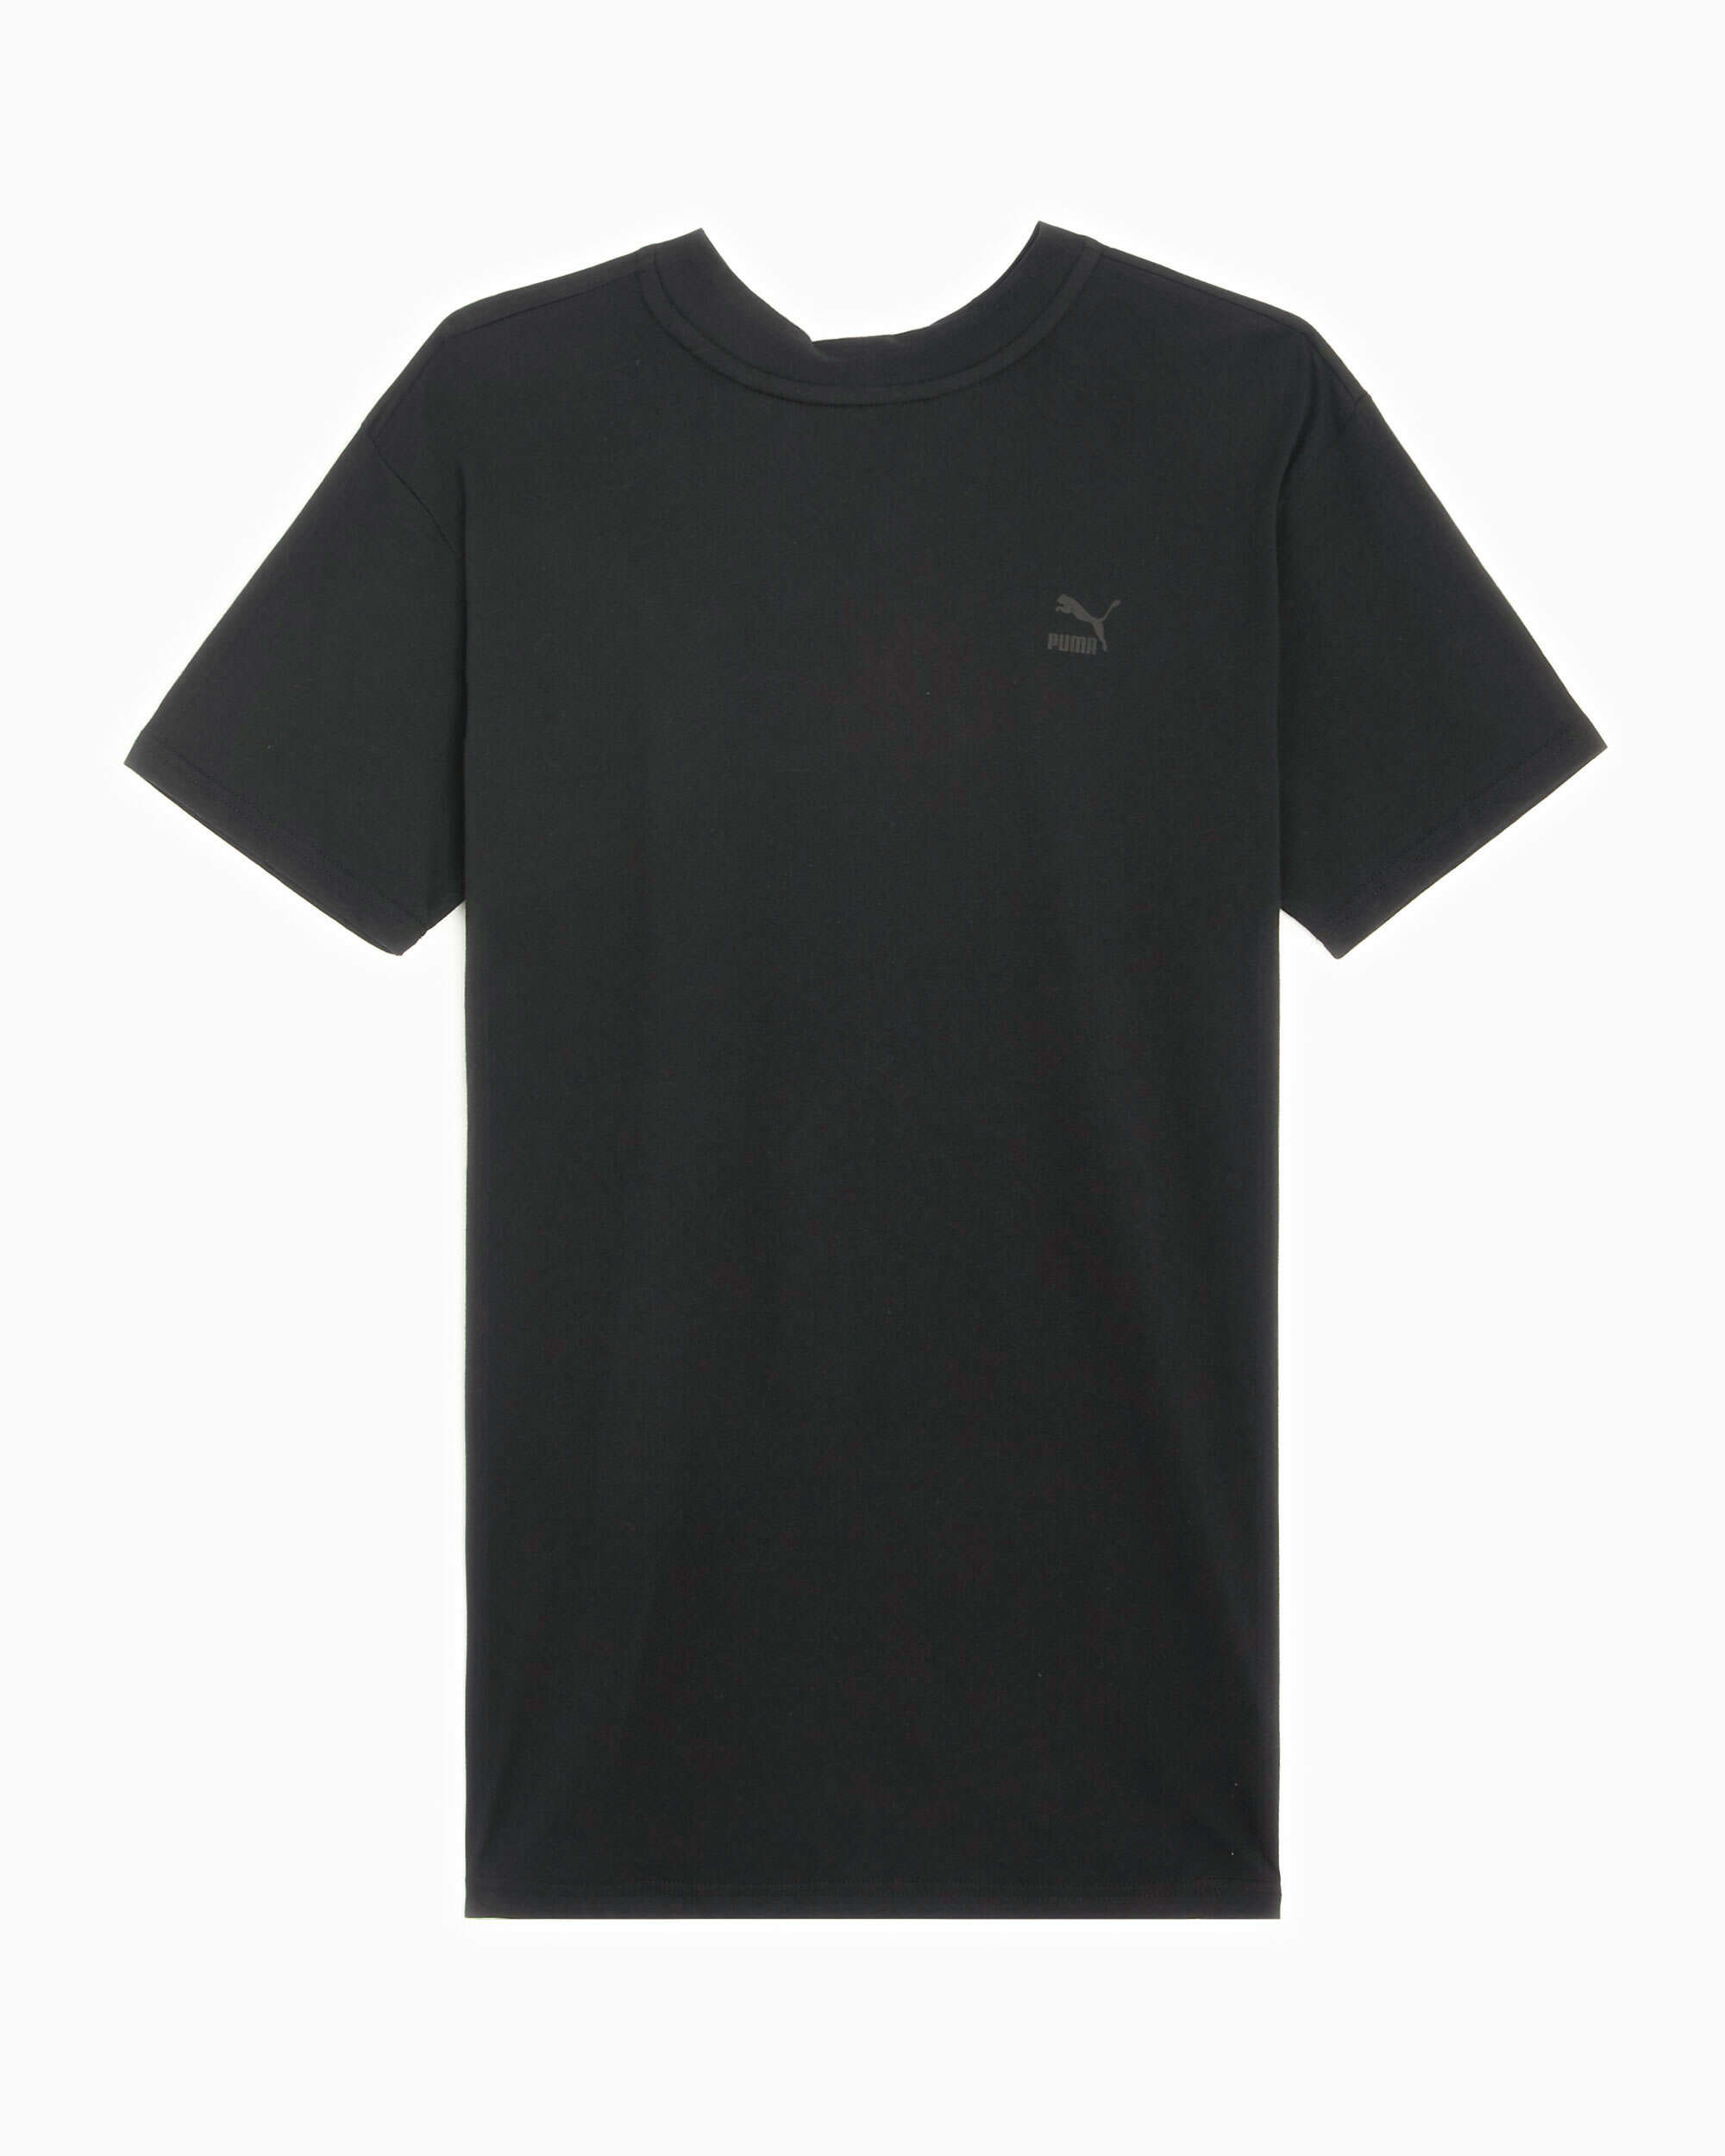 Women's T-Shirt Negro 850236-01| Comprar Online en FOOTDISTRICT